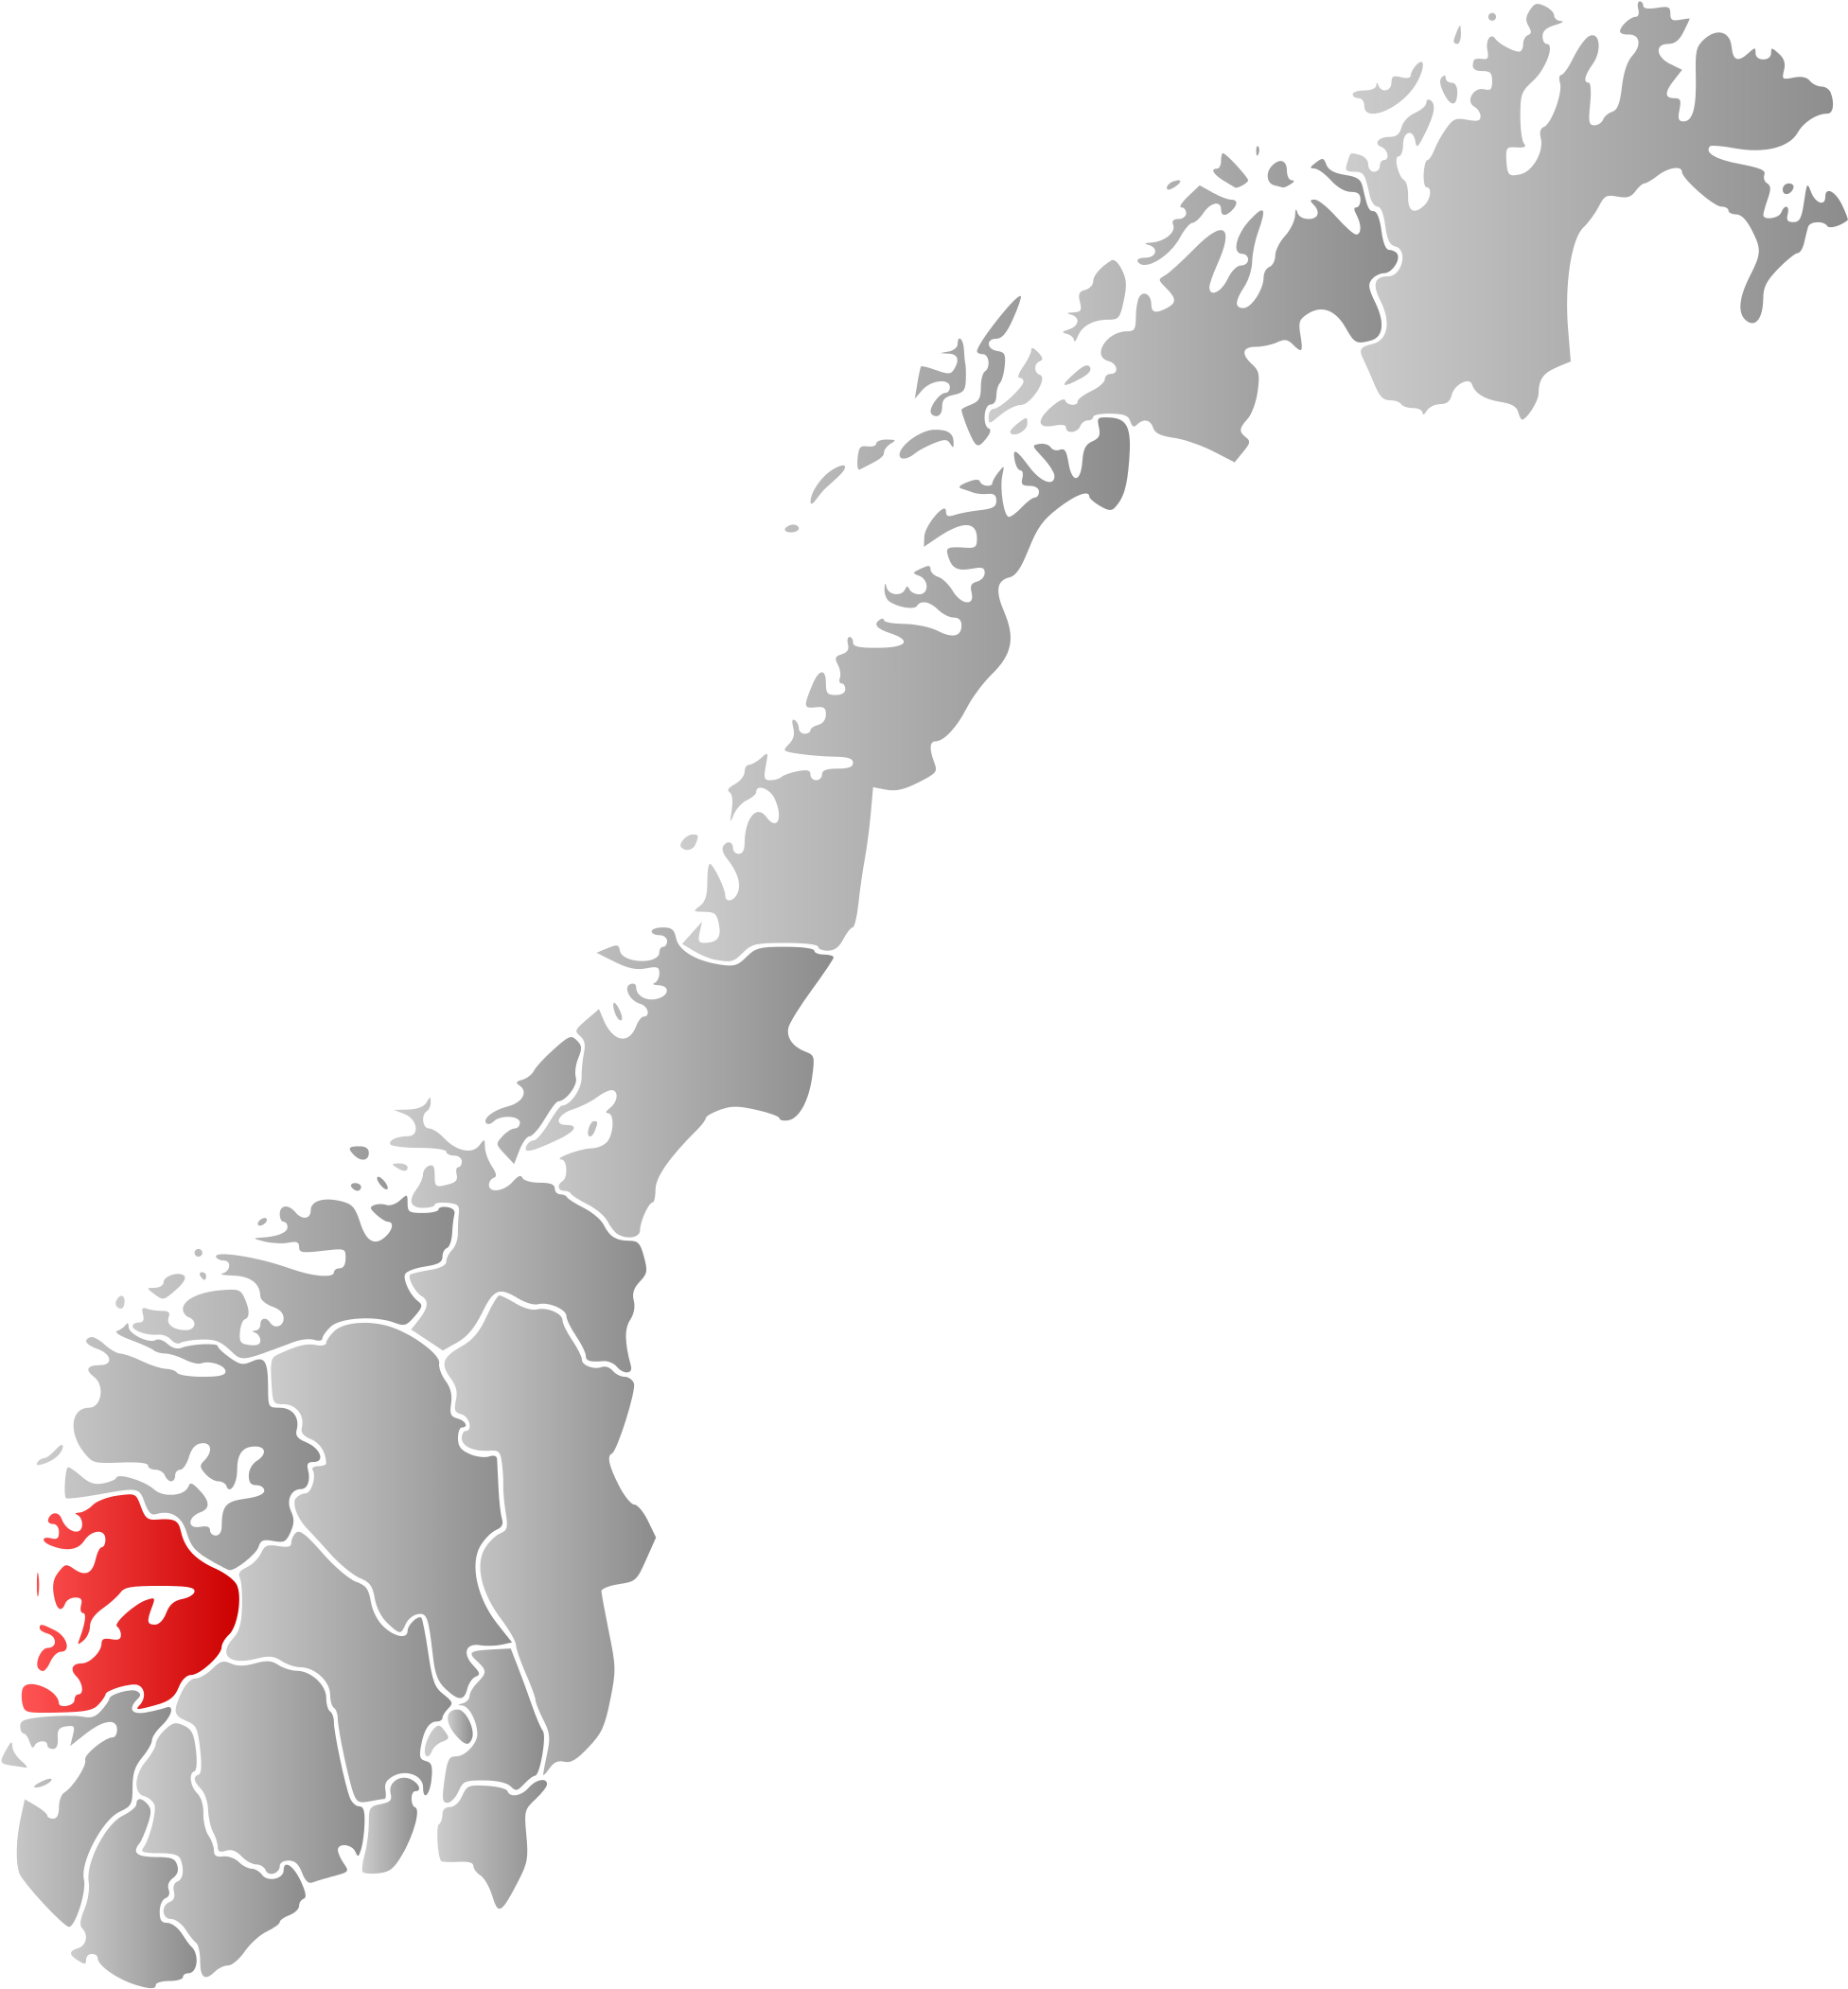 Norway Map Highlighting Oslo Region